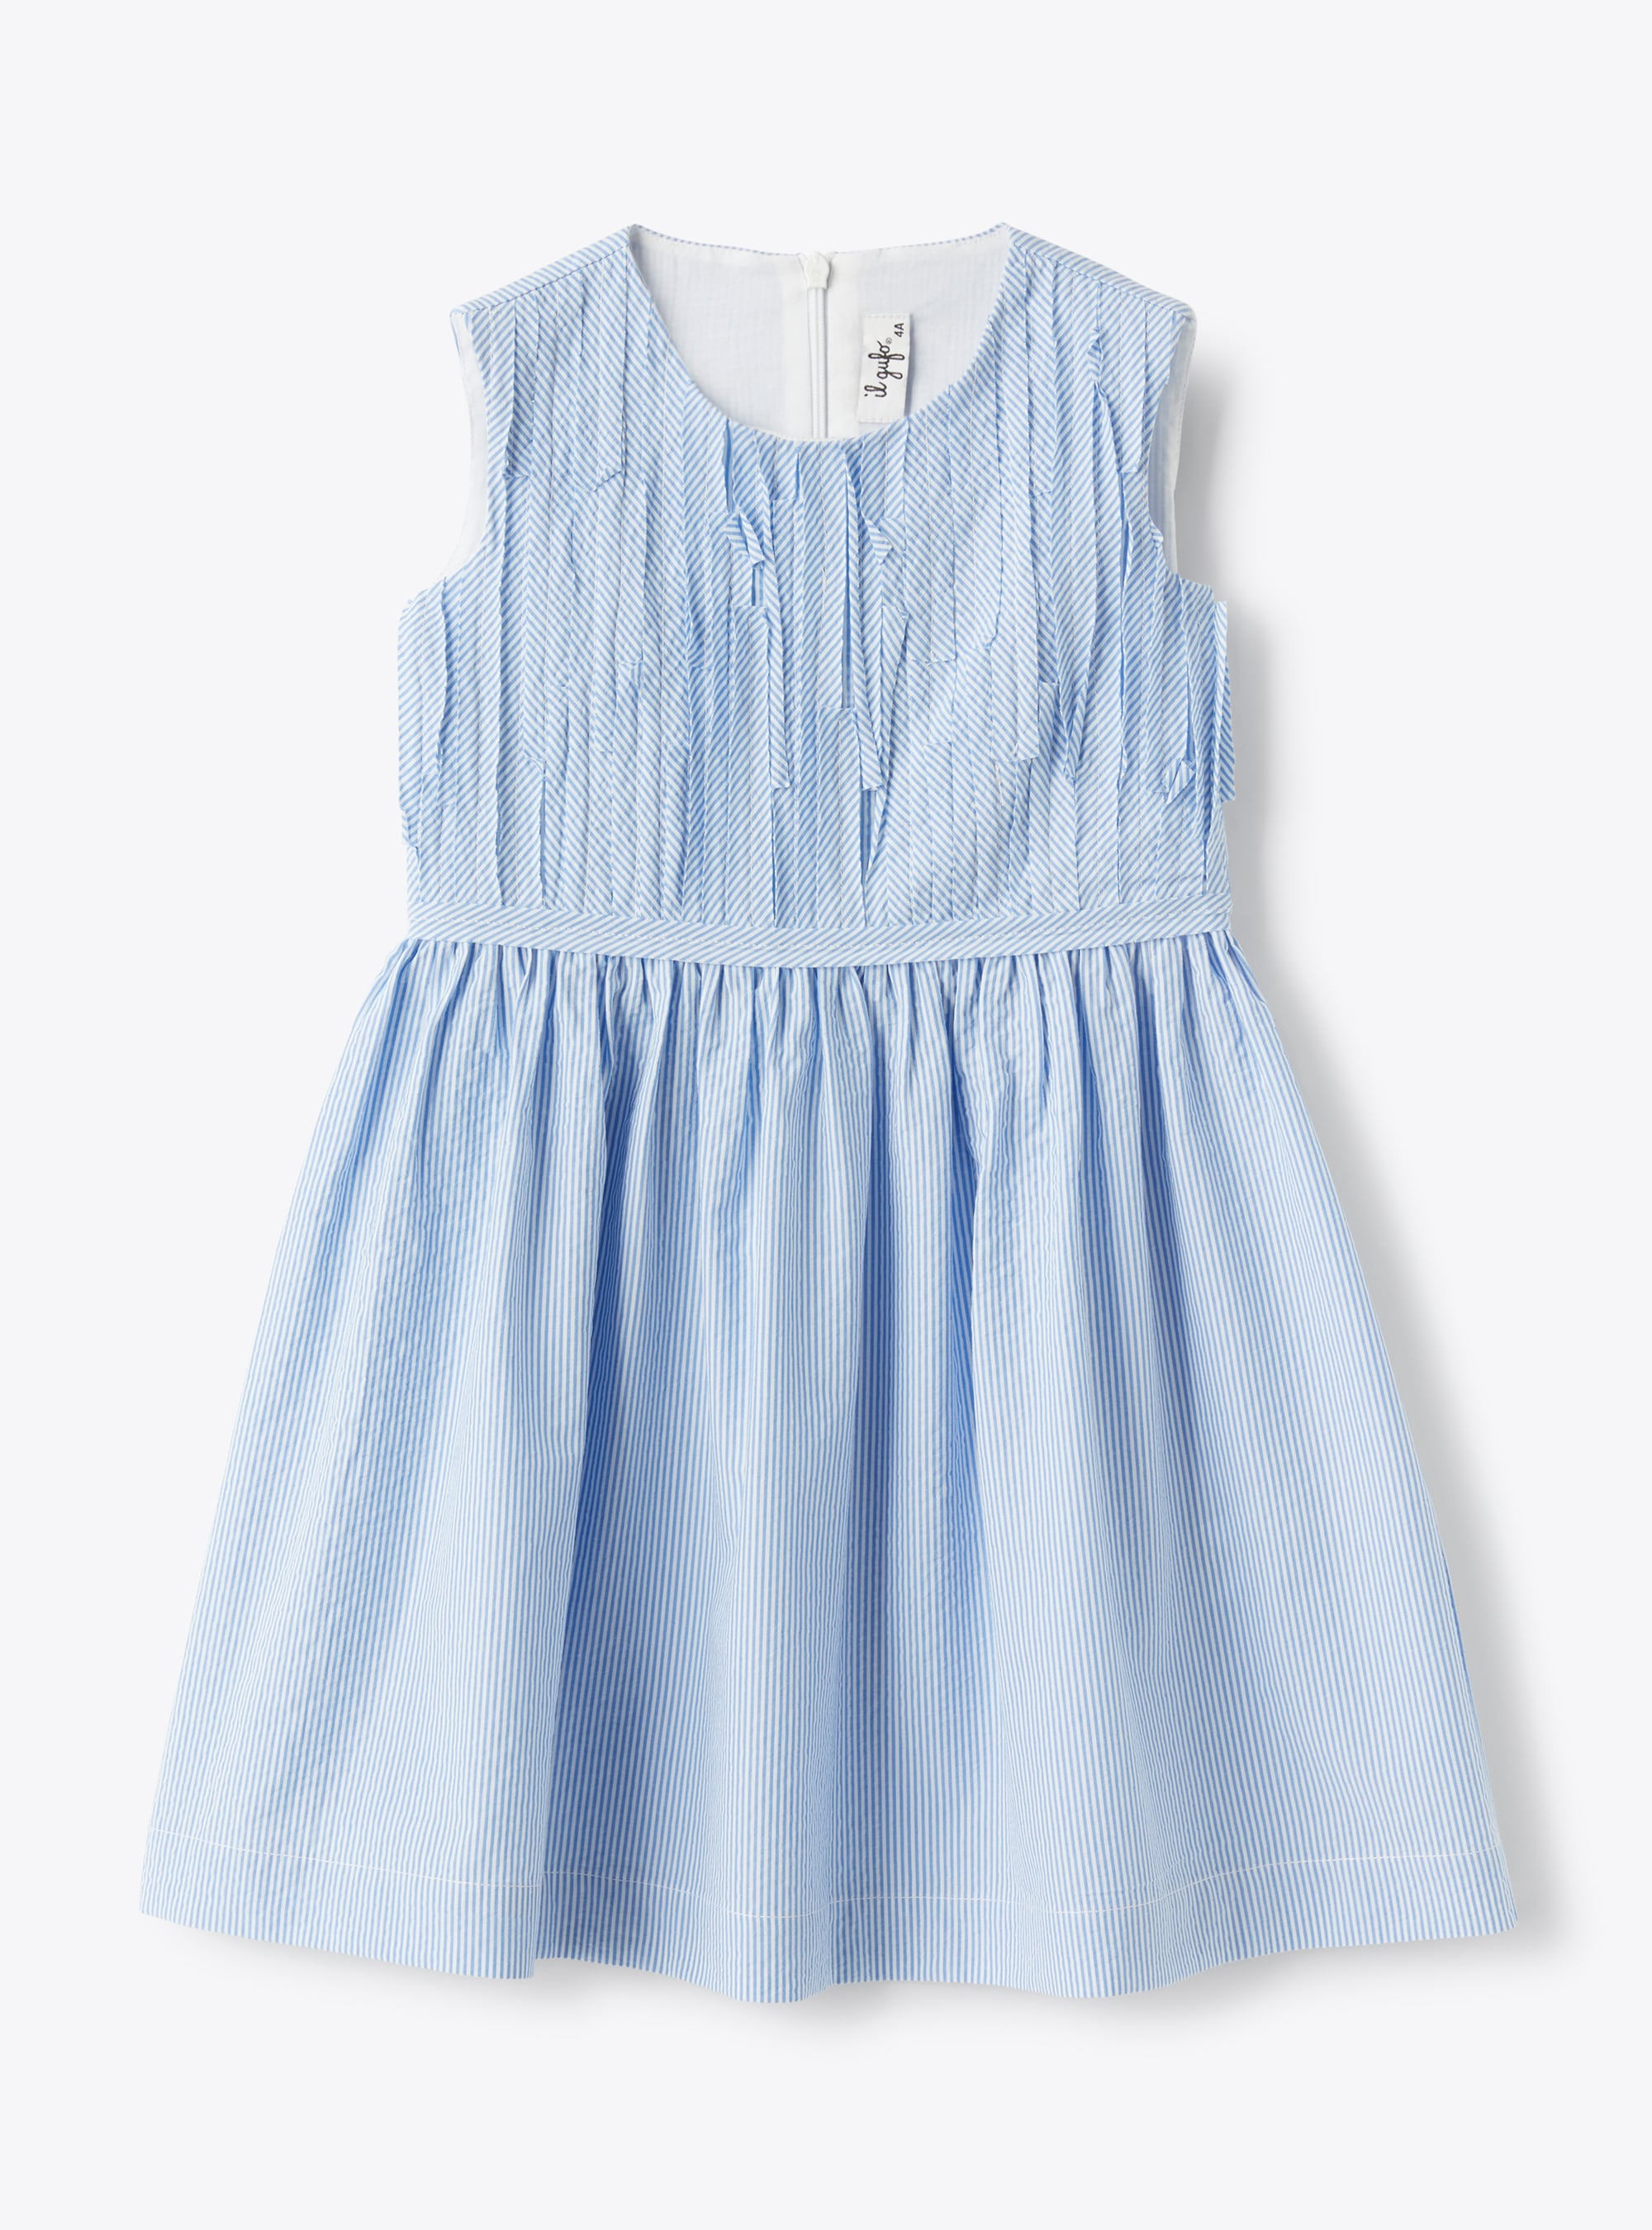 Sleeveless dress in blue-&-white-striped seersucker - Dresses - Il Gufo